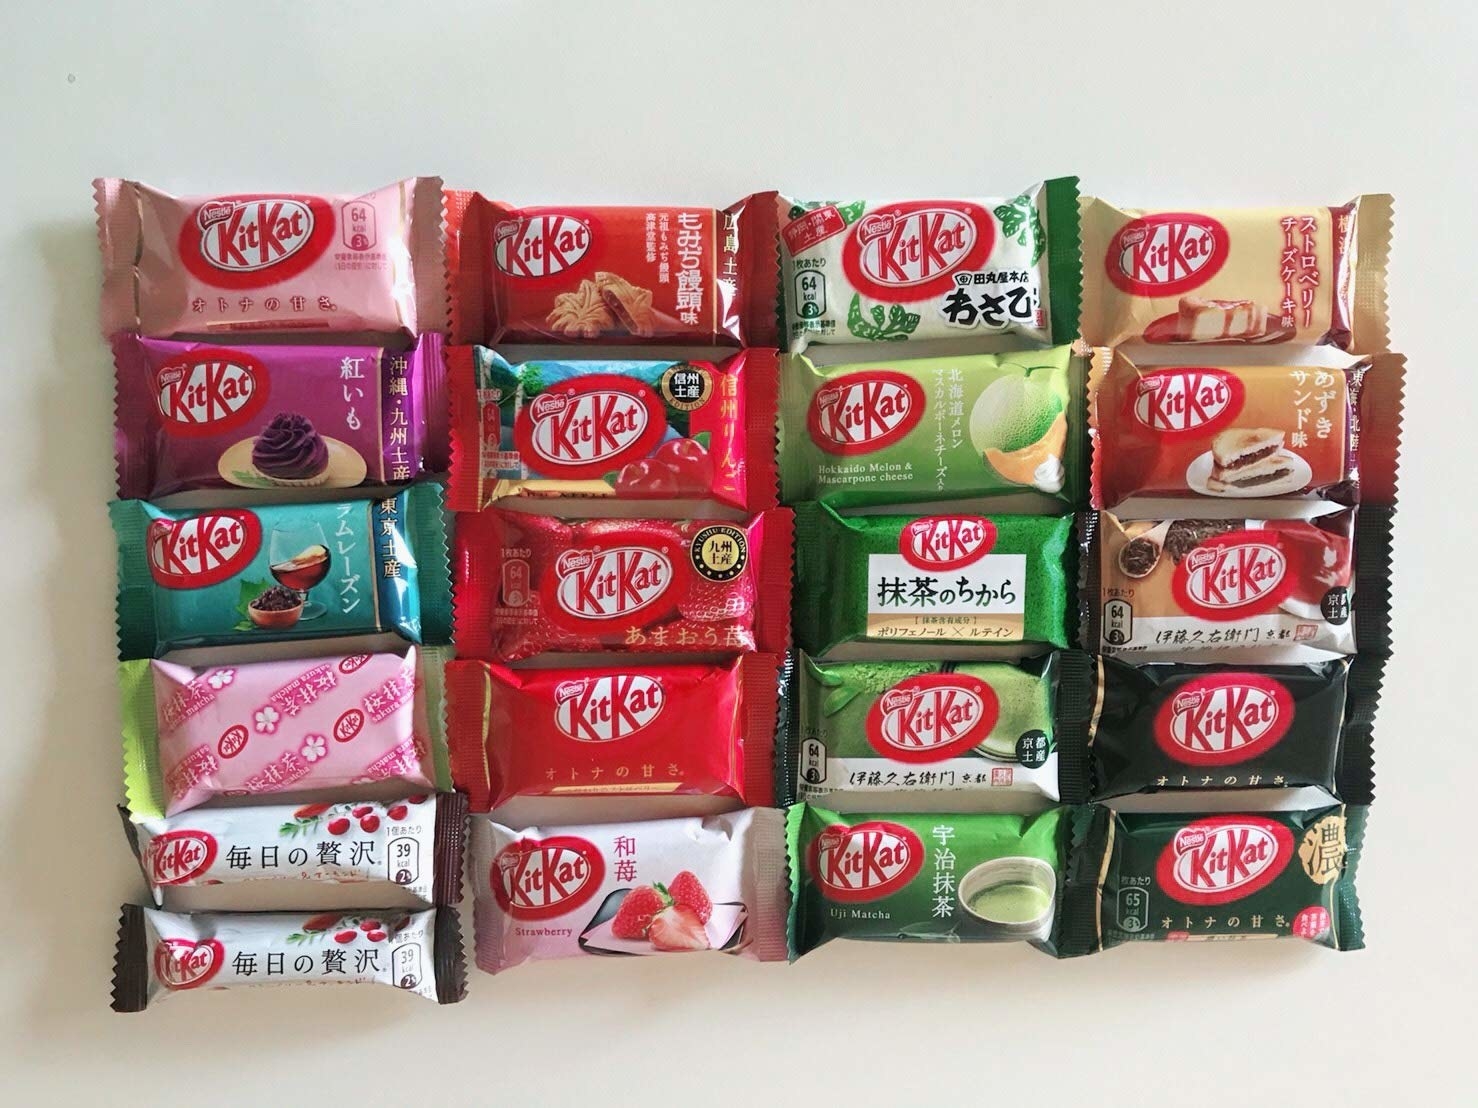 Japanese Kit Kats in many flavors.